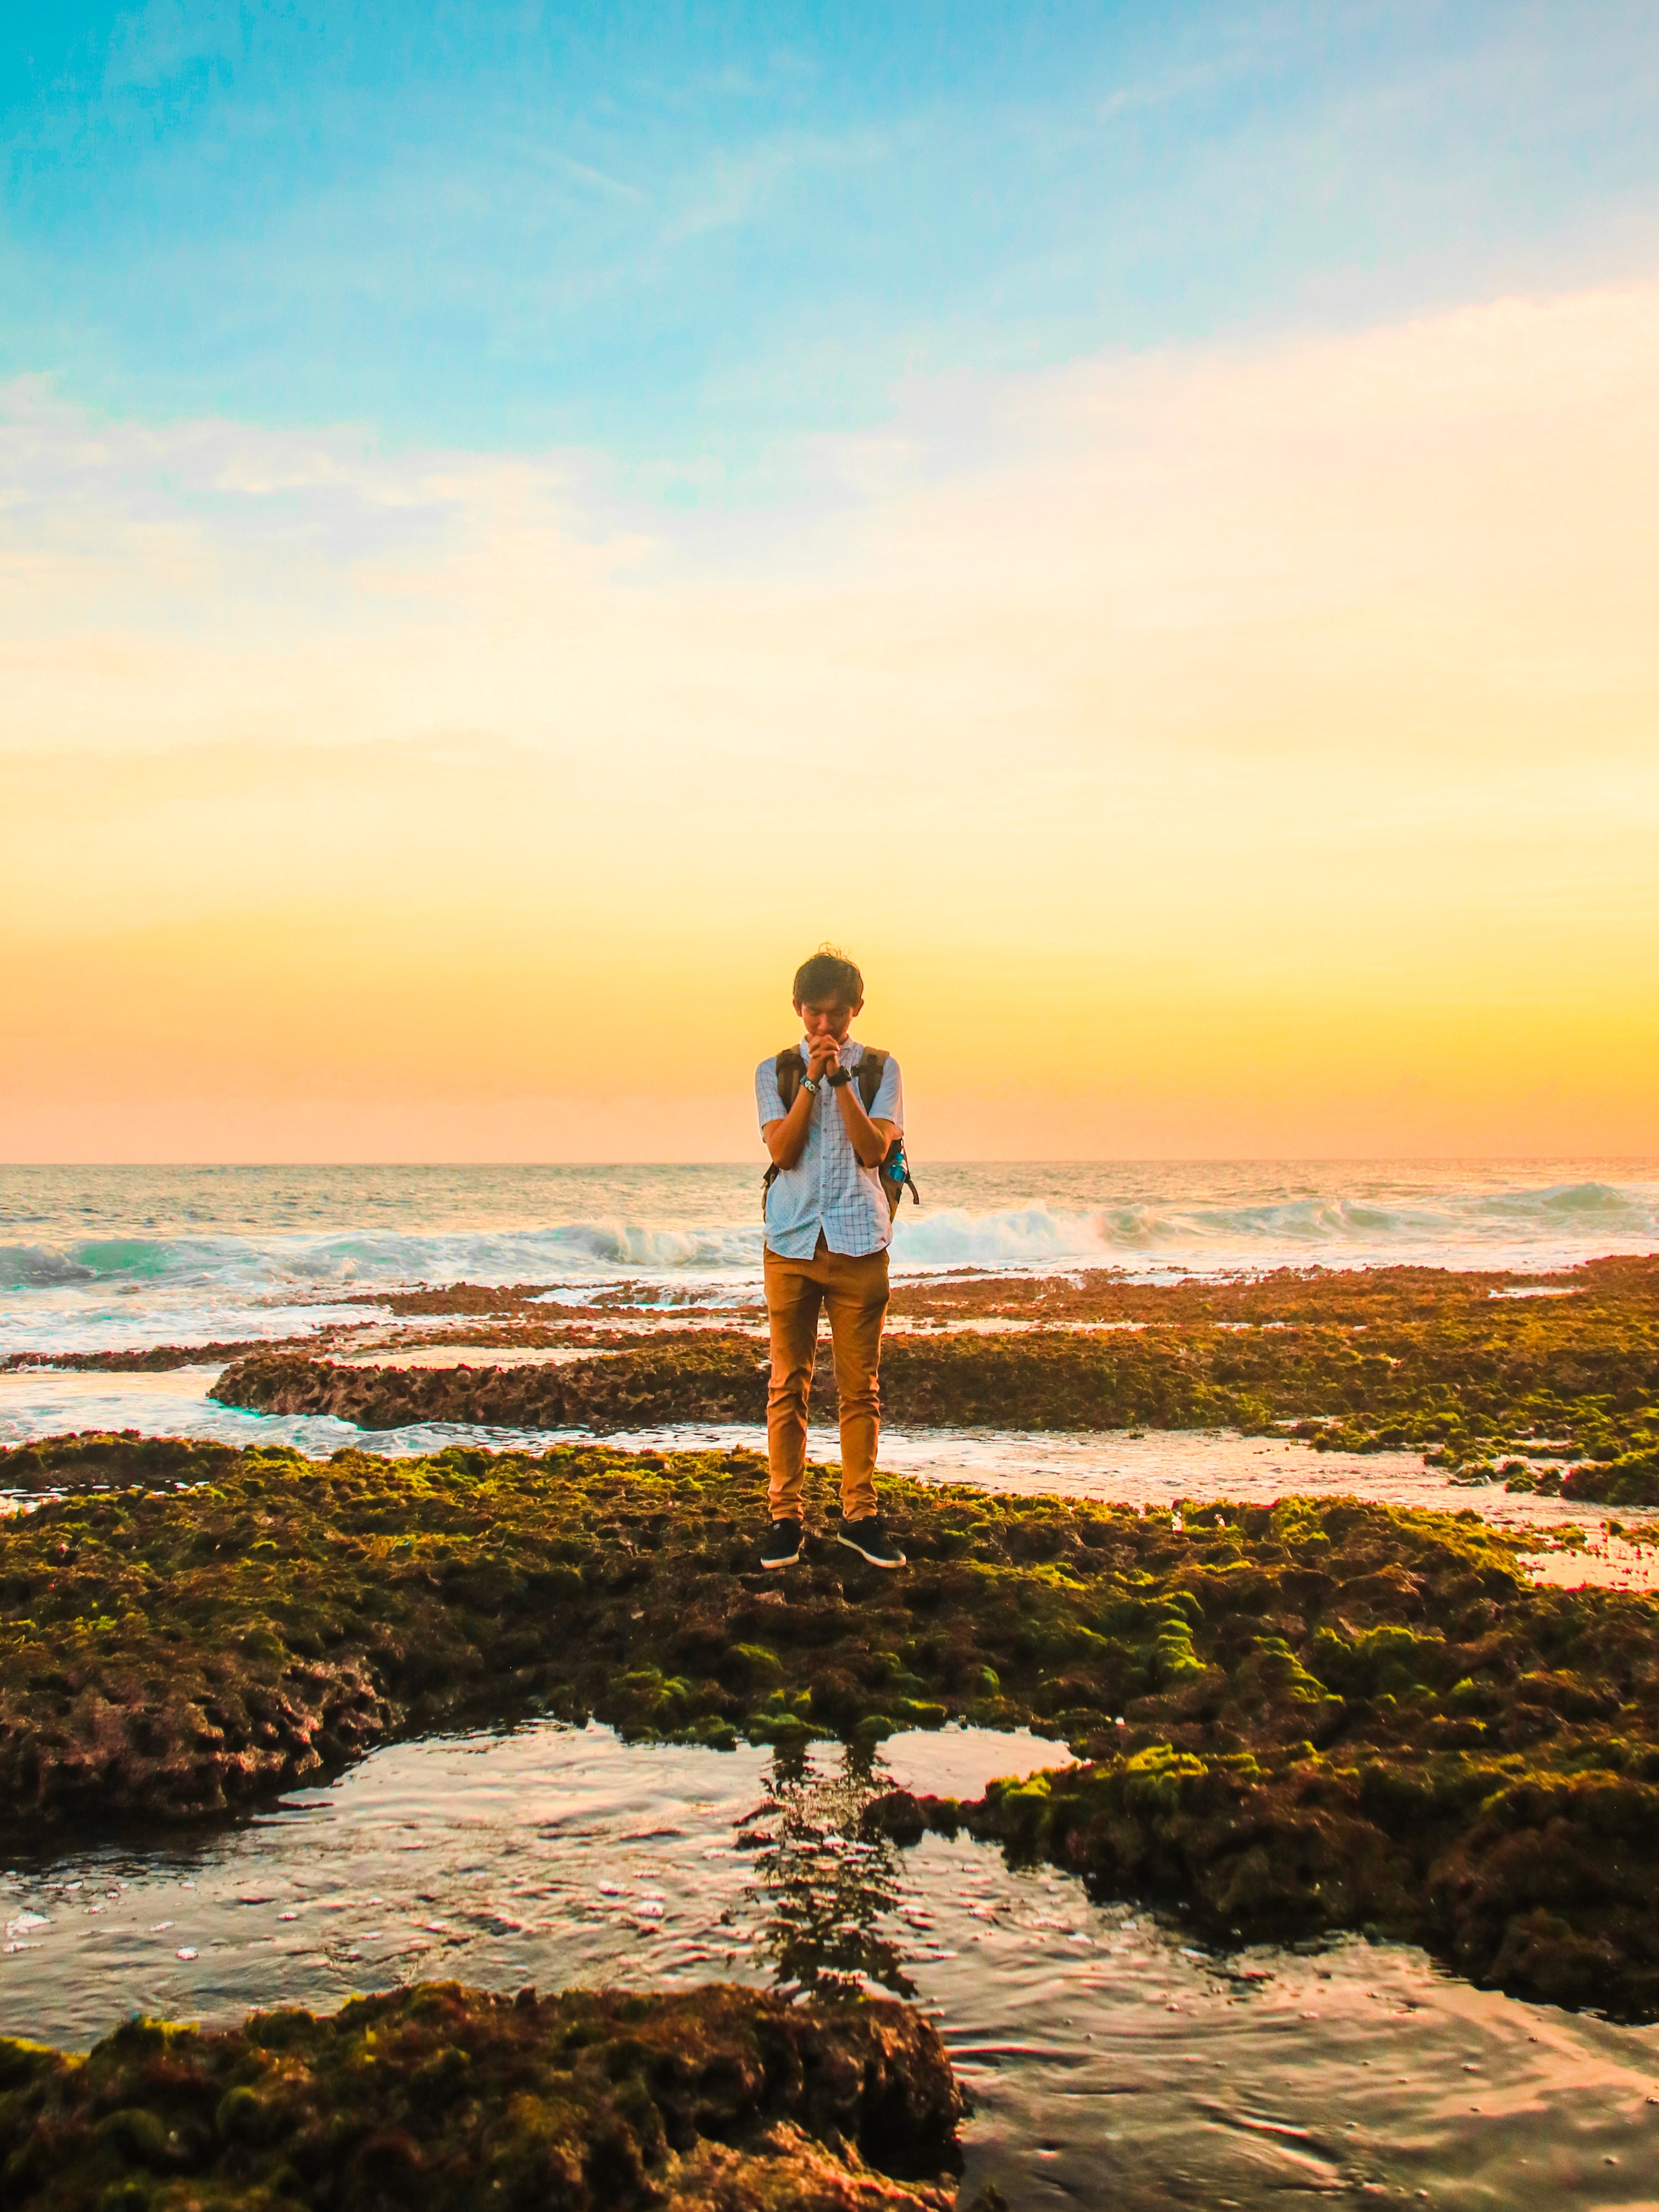 Man standing on rocks near beach during golden hour photo